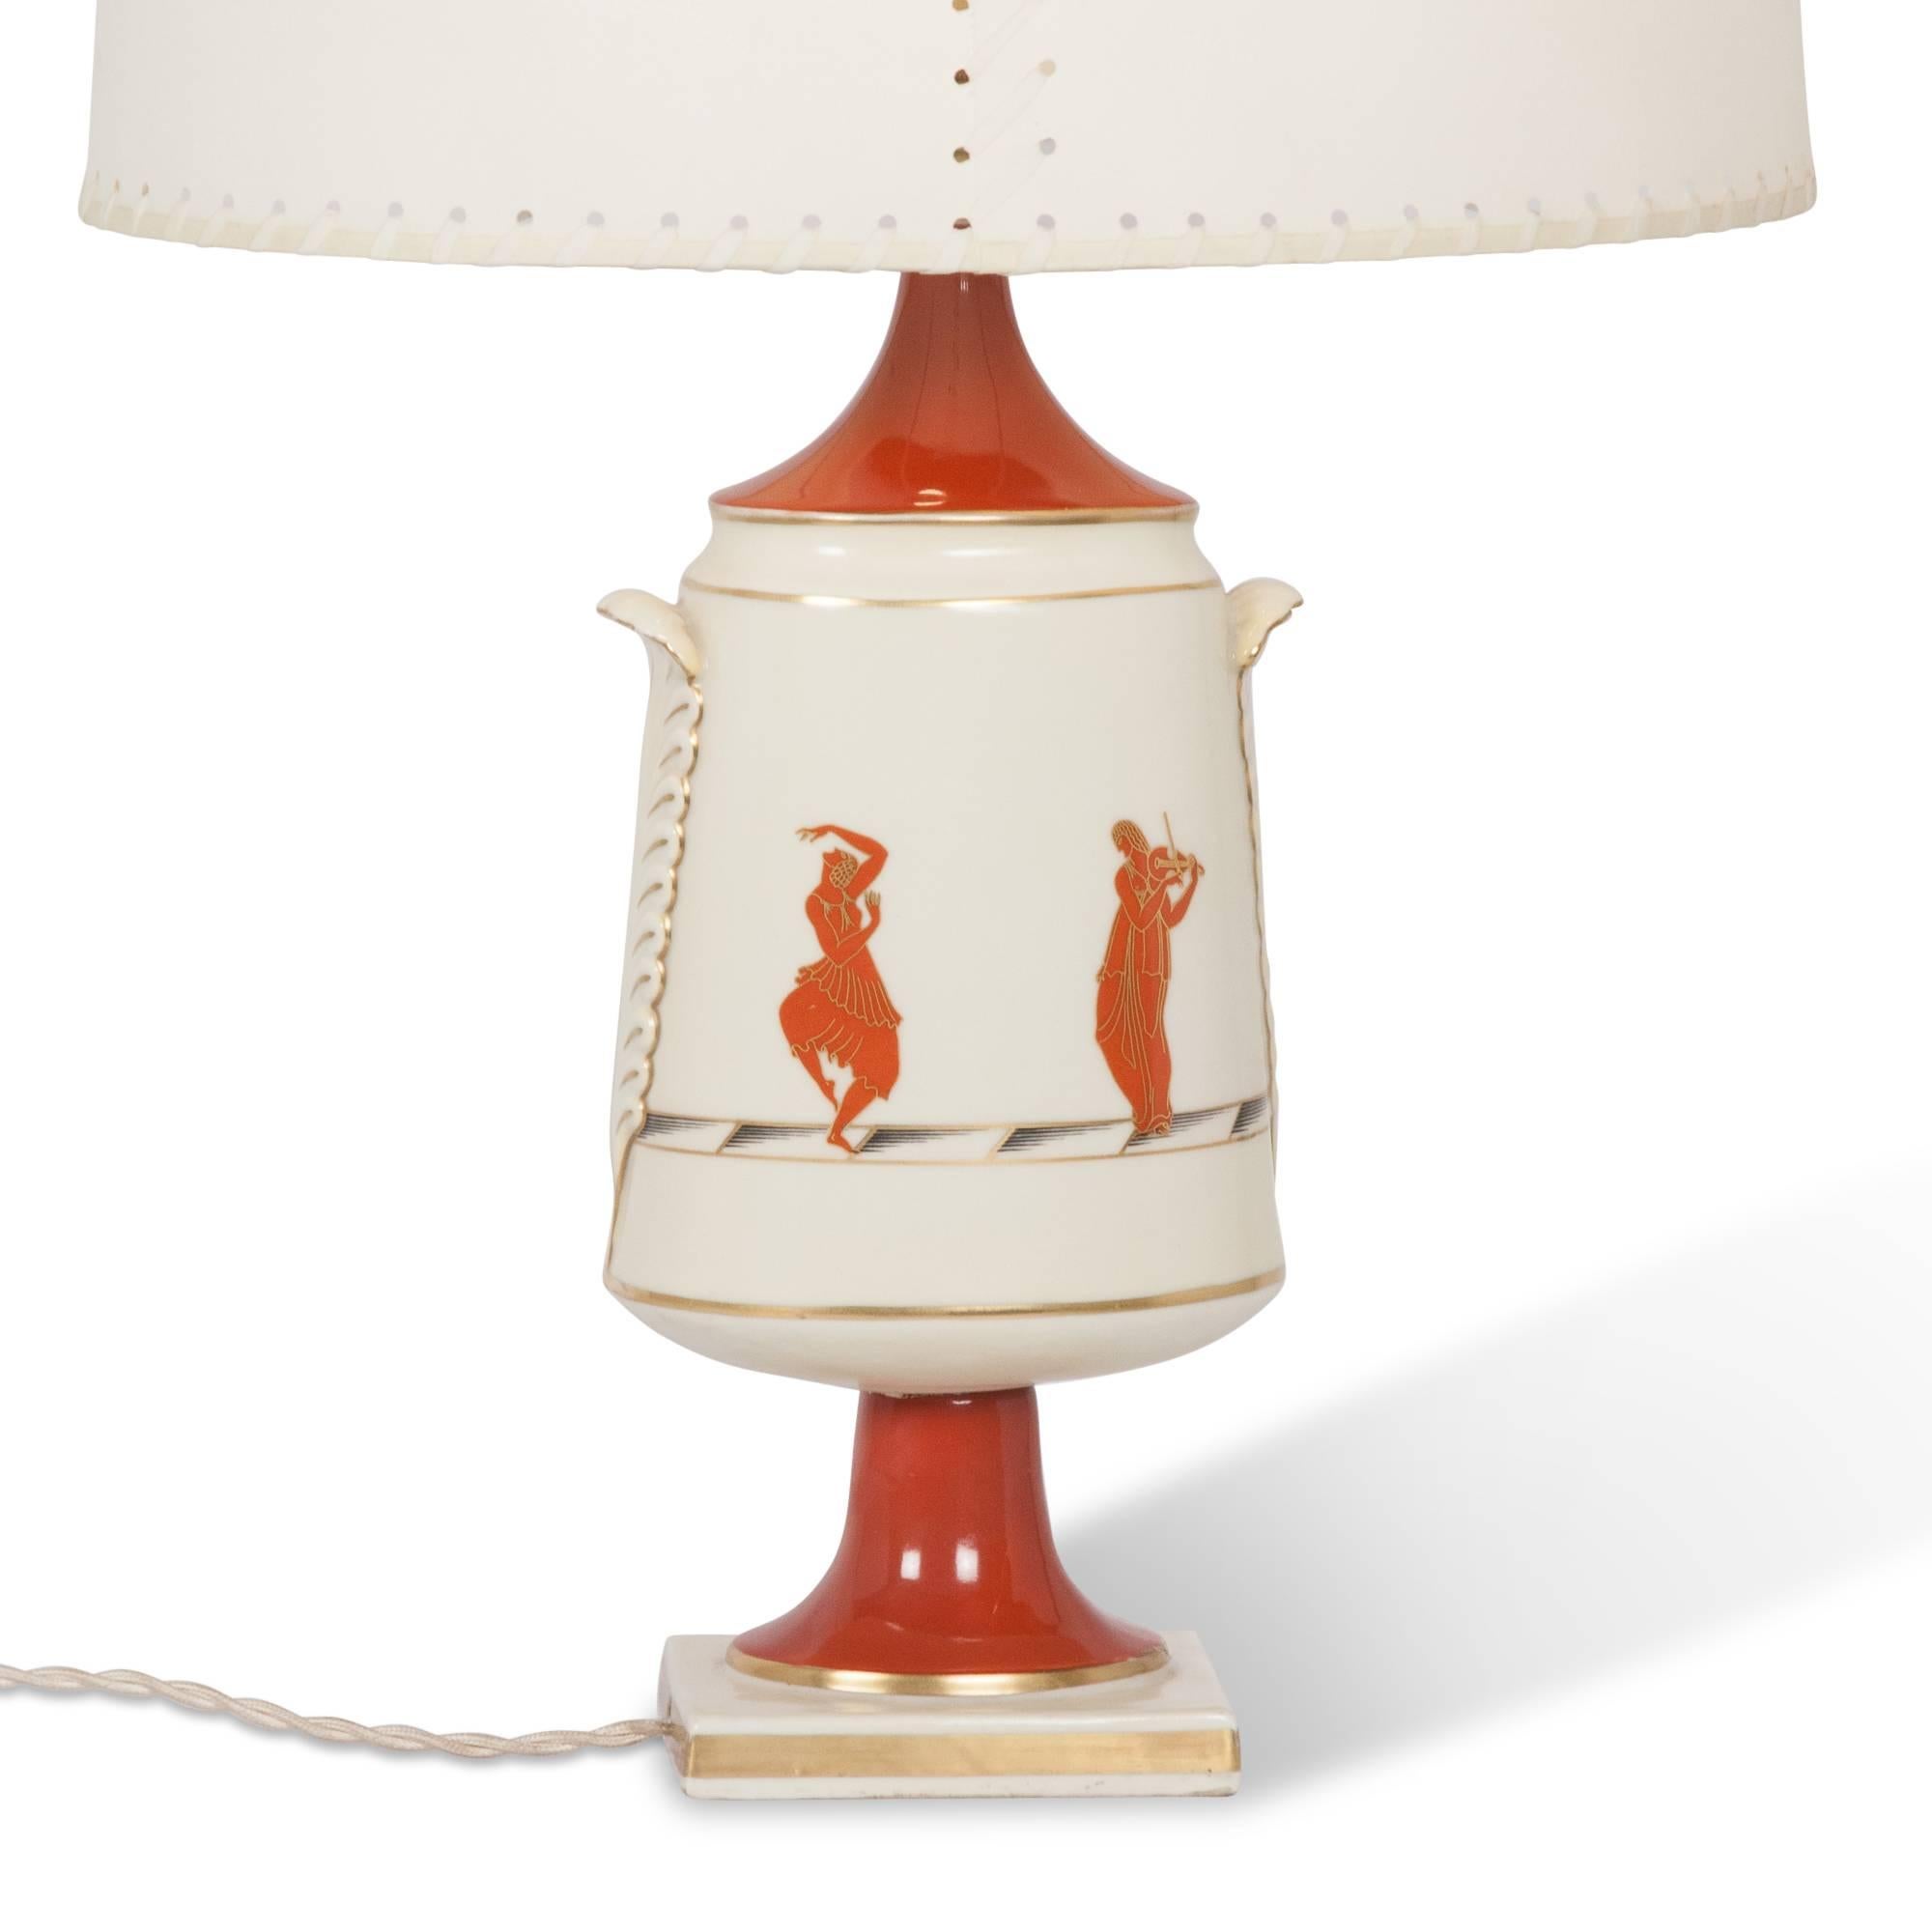 Ceramic Gio Ponti for Ginori Table Lamp, Italian, 1920s For Sale